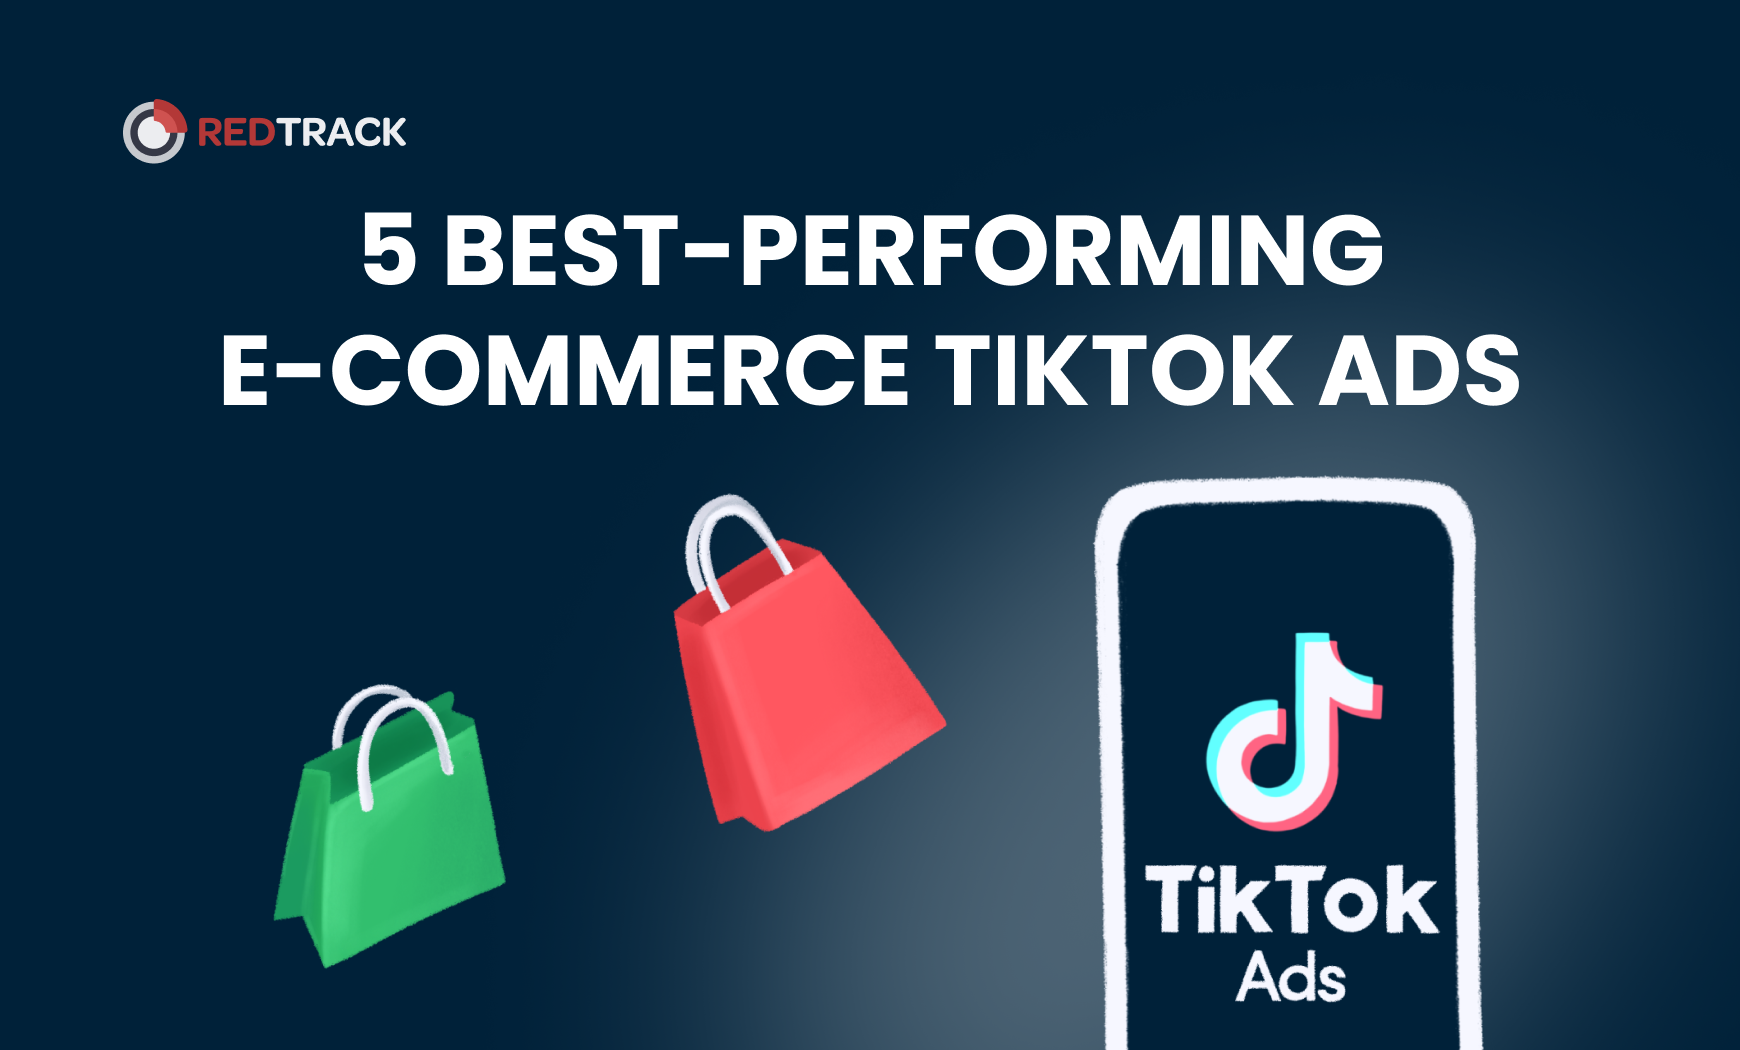 Facebook ads vs. TikTok ads for eCommerce